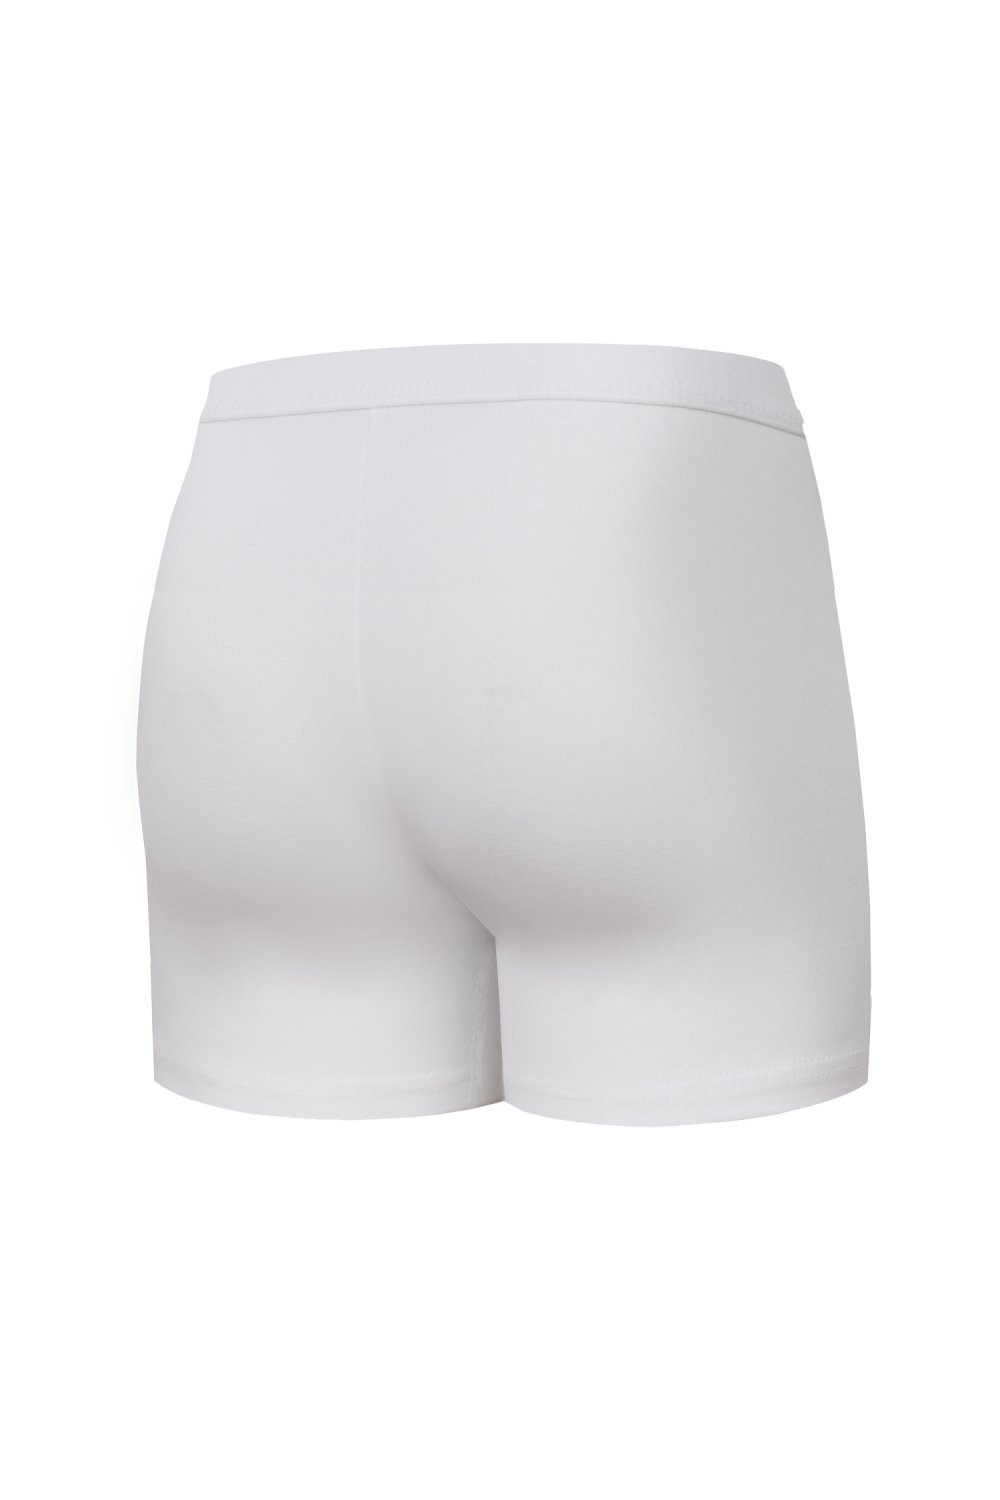 Pánské boxerky 092 Authentic plus white - CORNETTE bílá 5XL